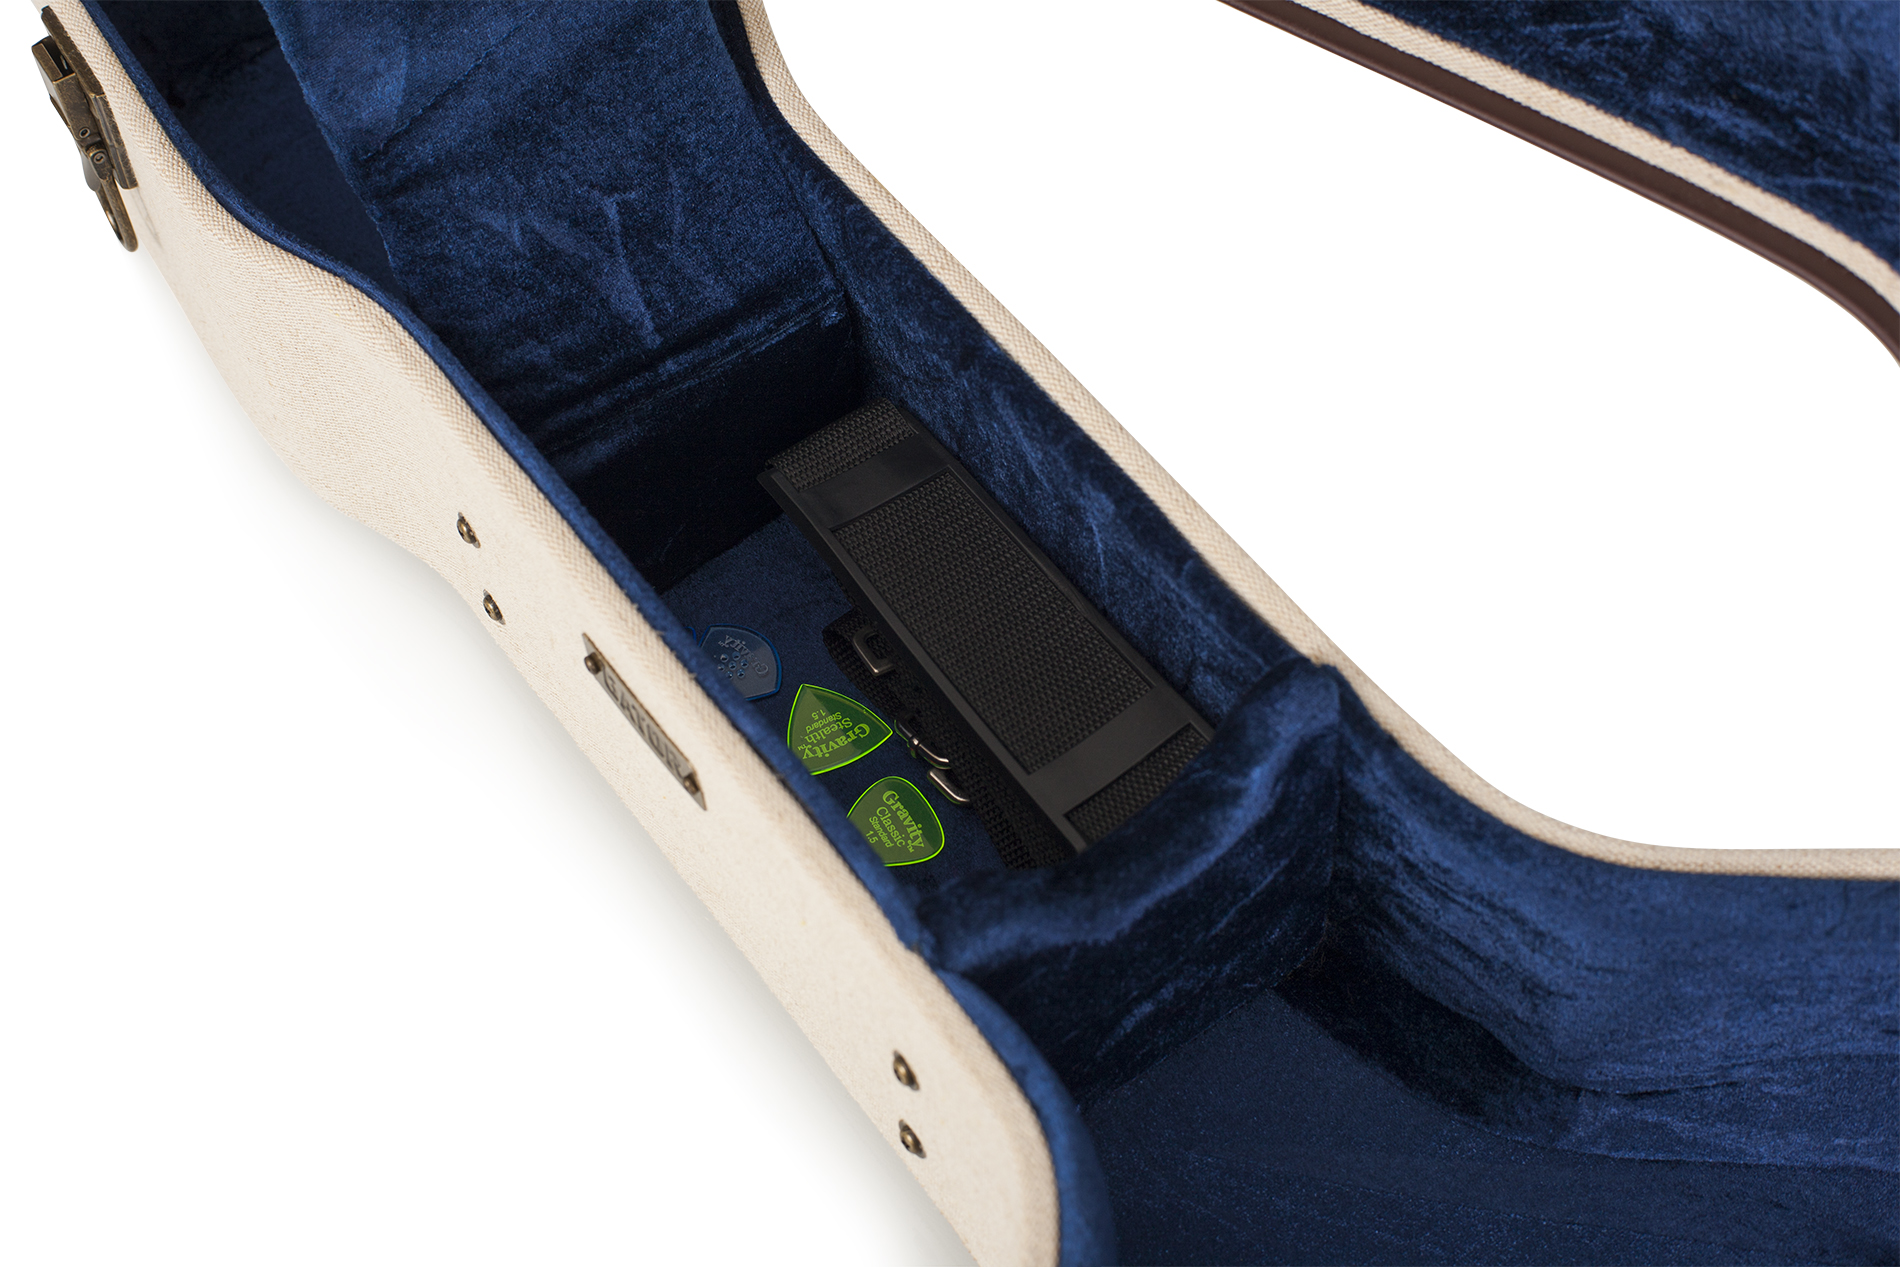 Journeyman Dreadnaught Acoustic Deluxe Wood Case-GW-JM DREAD